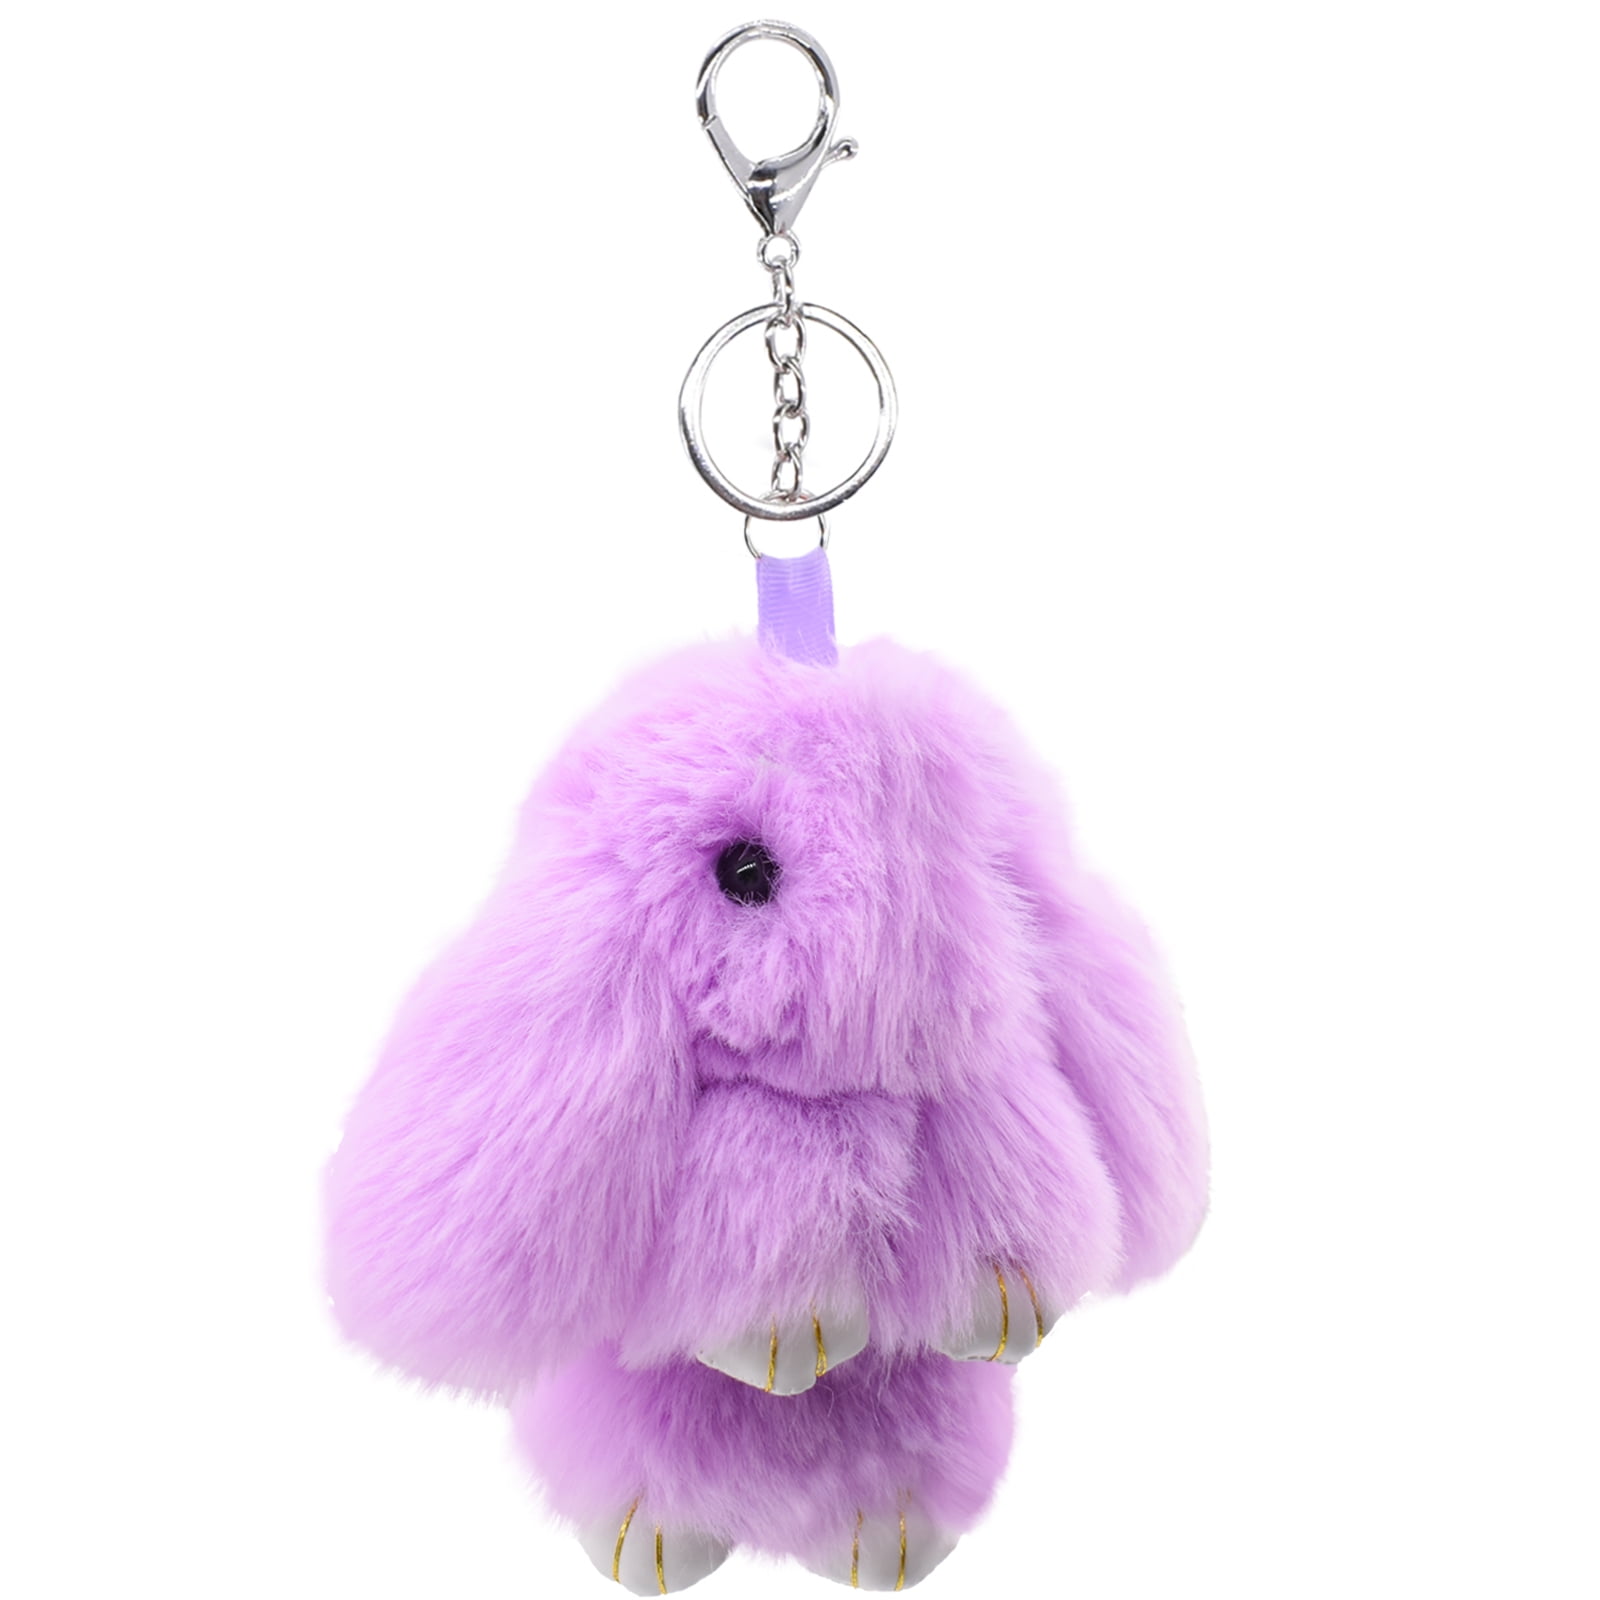 Begood Rabbit Fluffy Pom Pom Rex Bunny Keychain